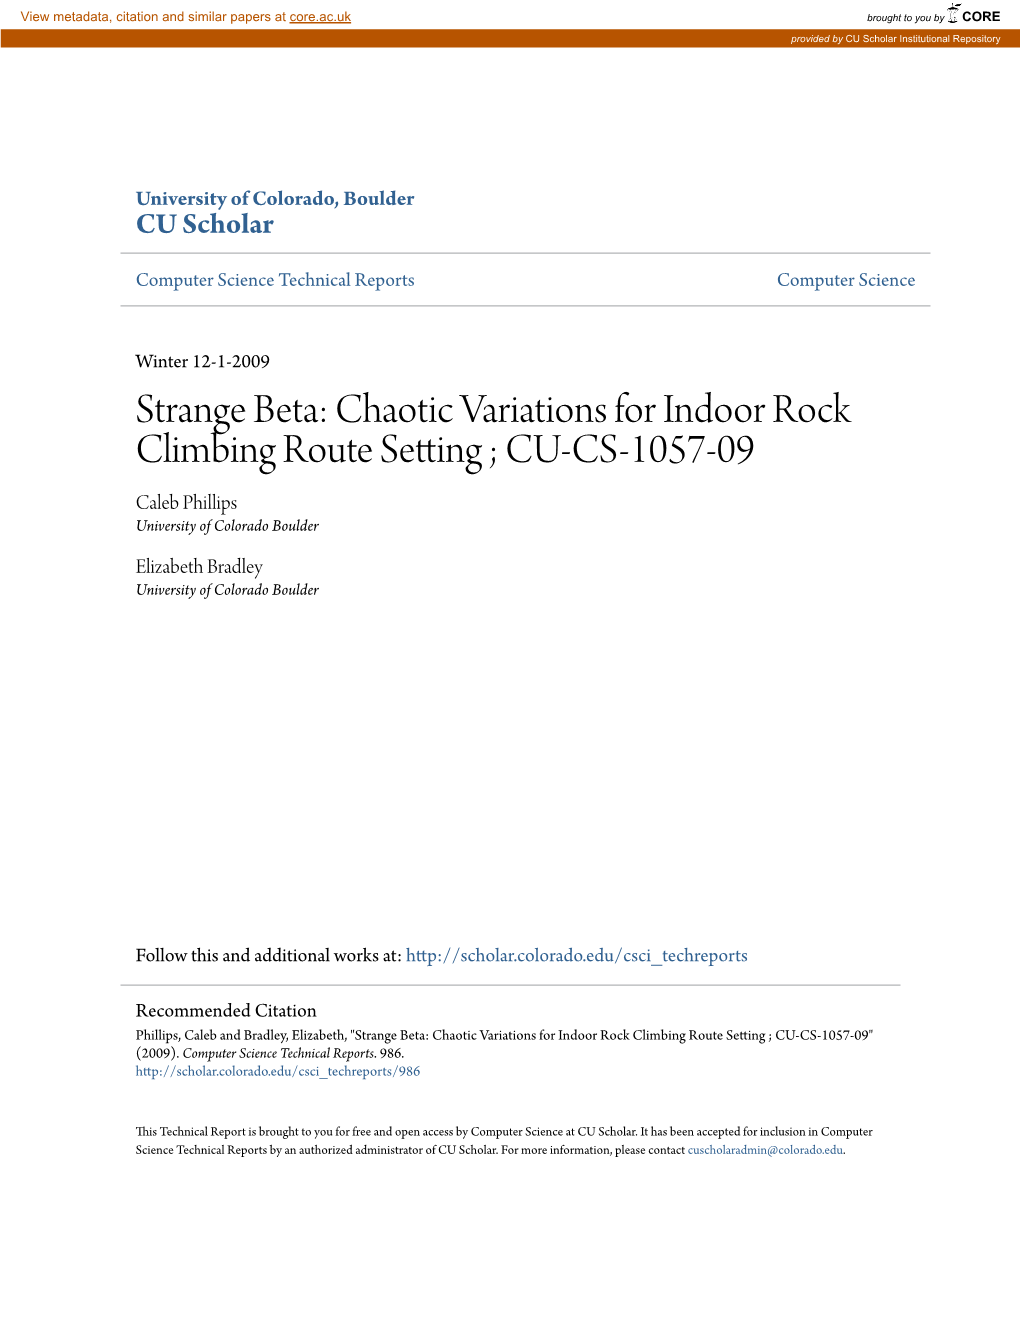 Strange Beta: Chaotic Variations for Indoor Rock Climbing Route Setting ; CU-CS-1057-09 Caleb Phillips University of Colorado Boulder